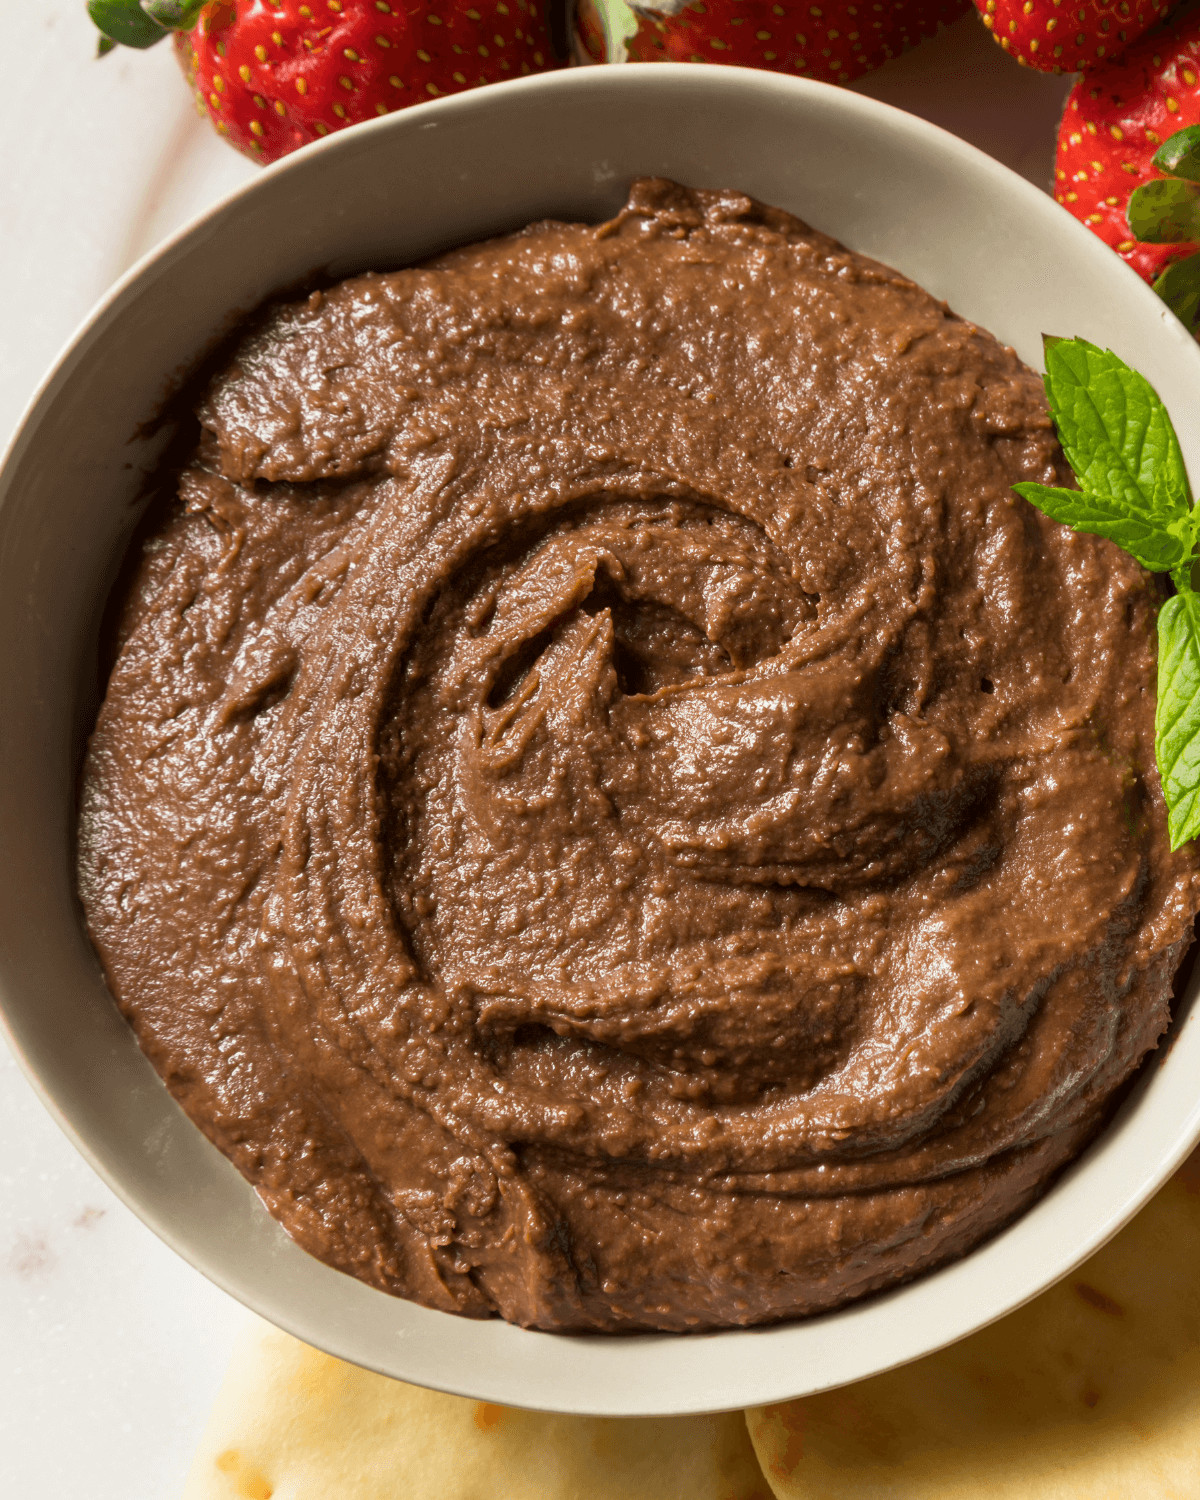 A bowl of dark chocolate hummus.